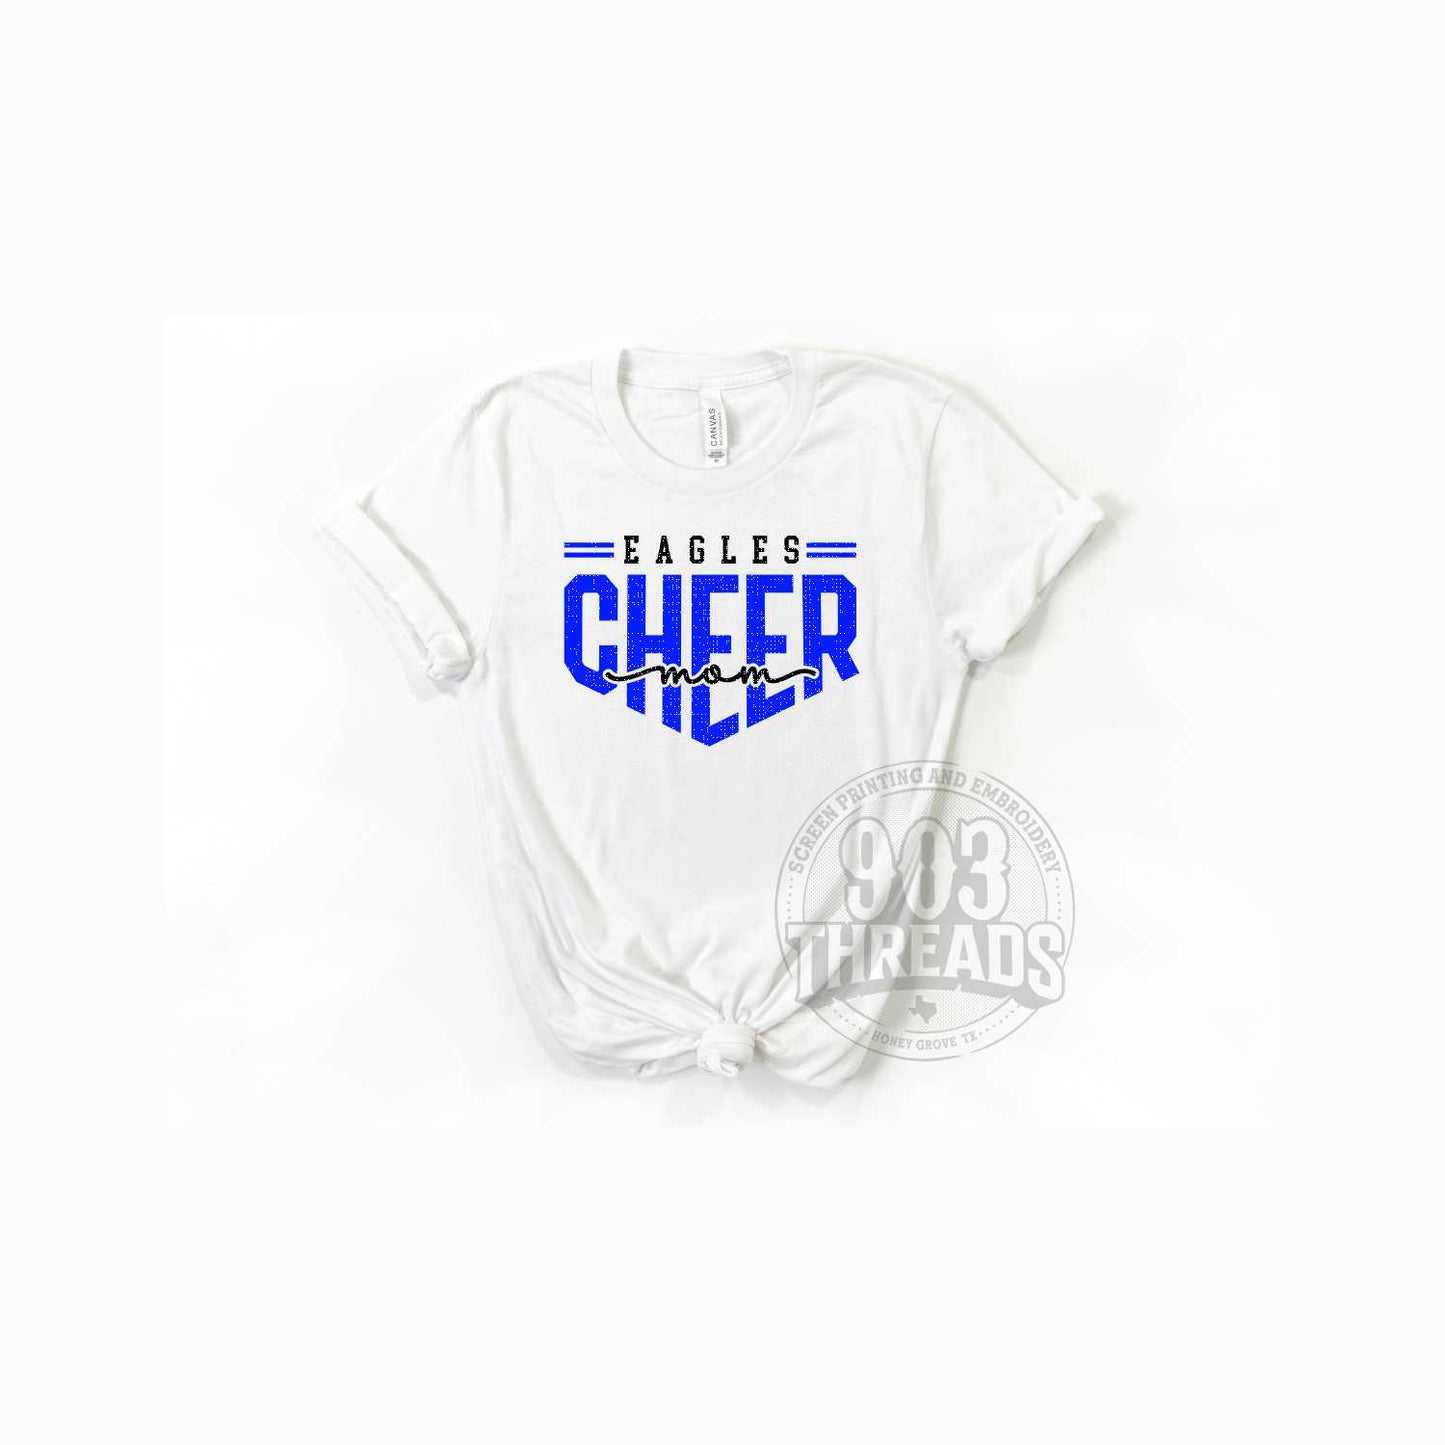 Eagles Cheer Mom - Store closes 9/17!